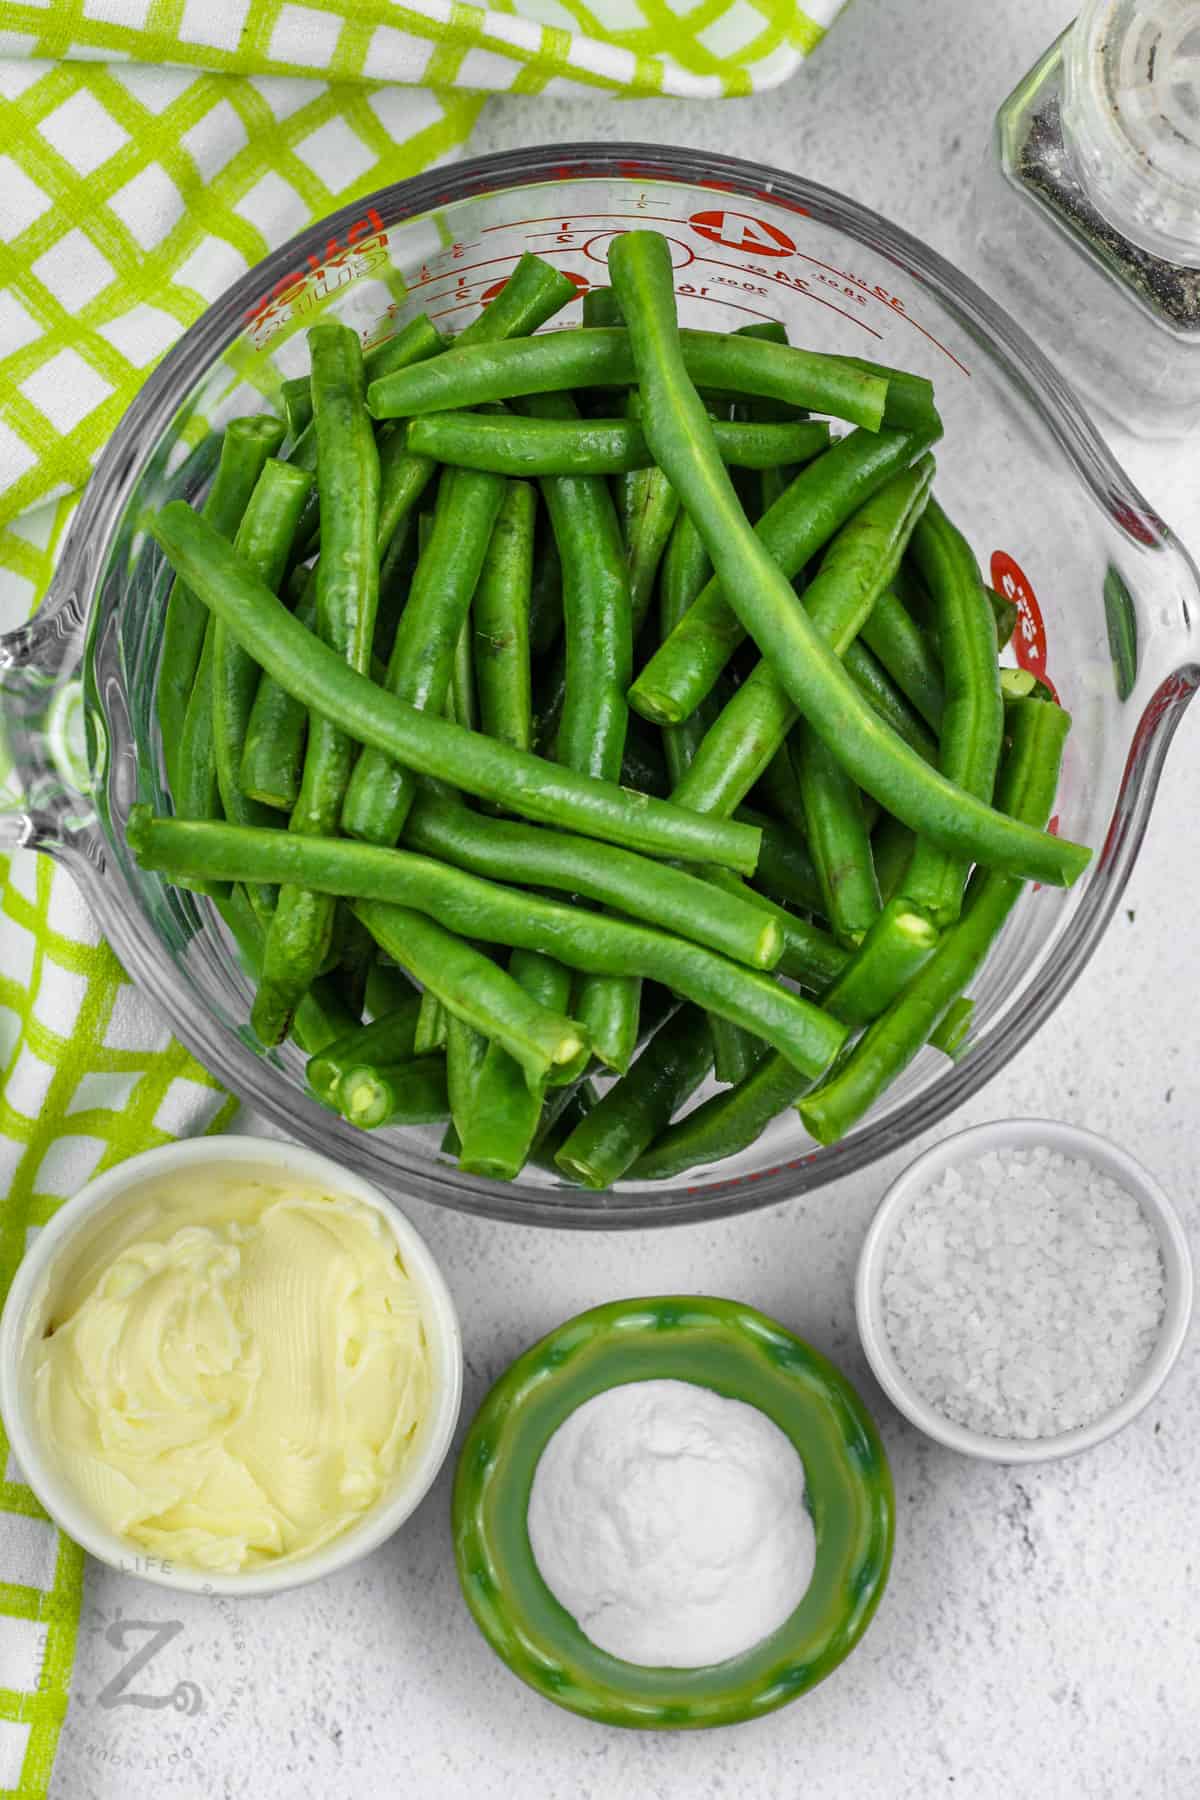 Green Beans ingredients